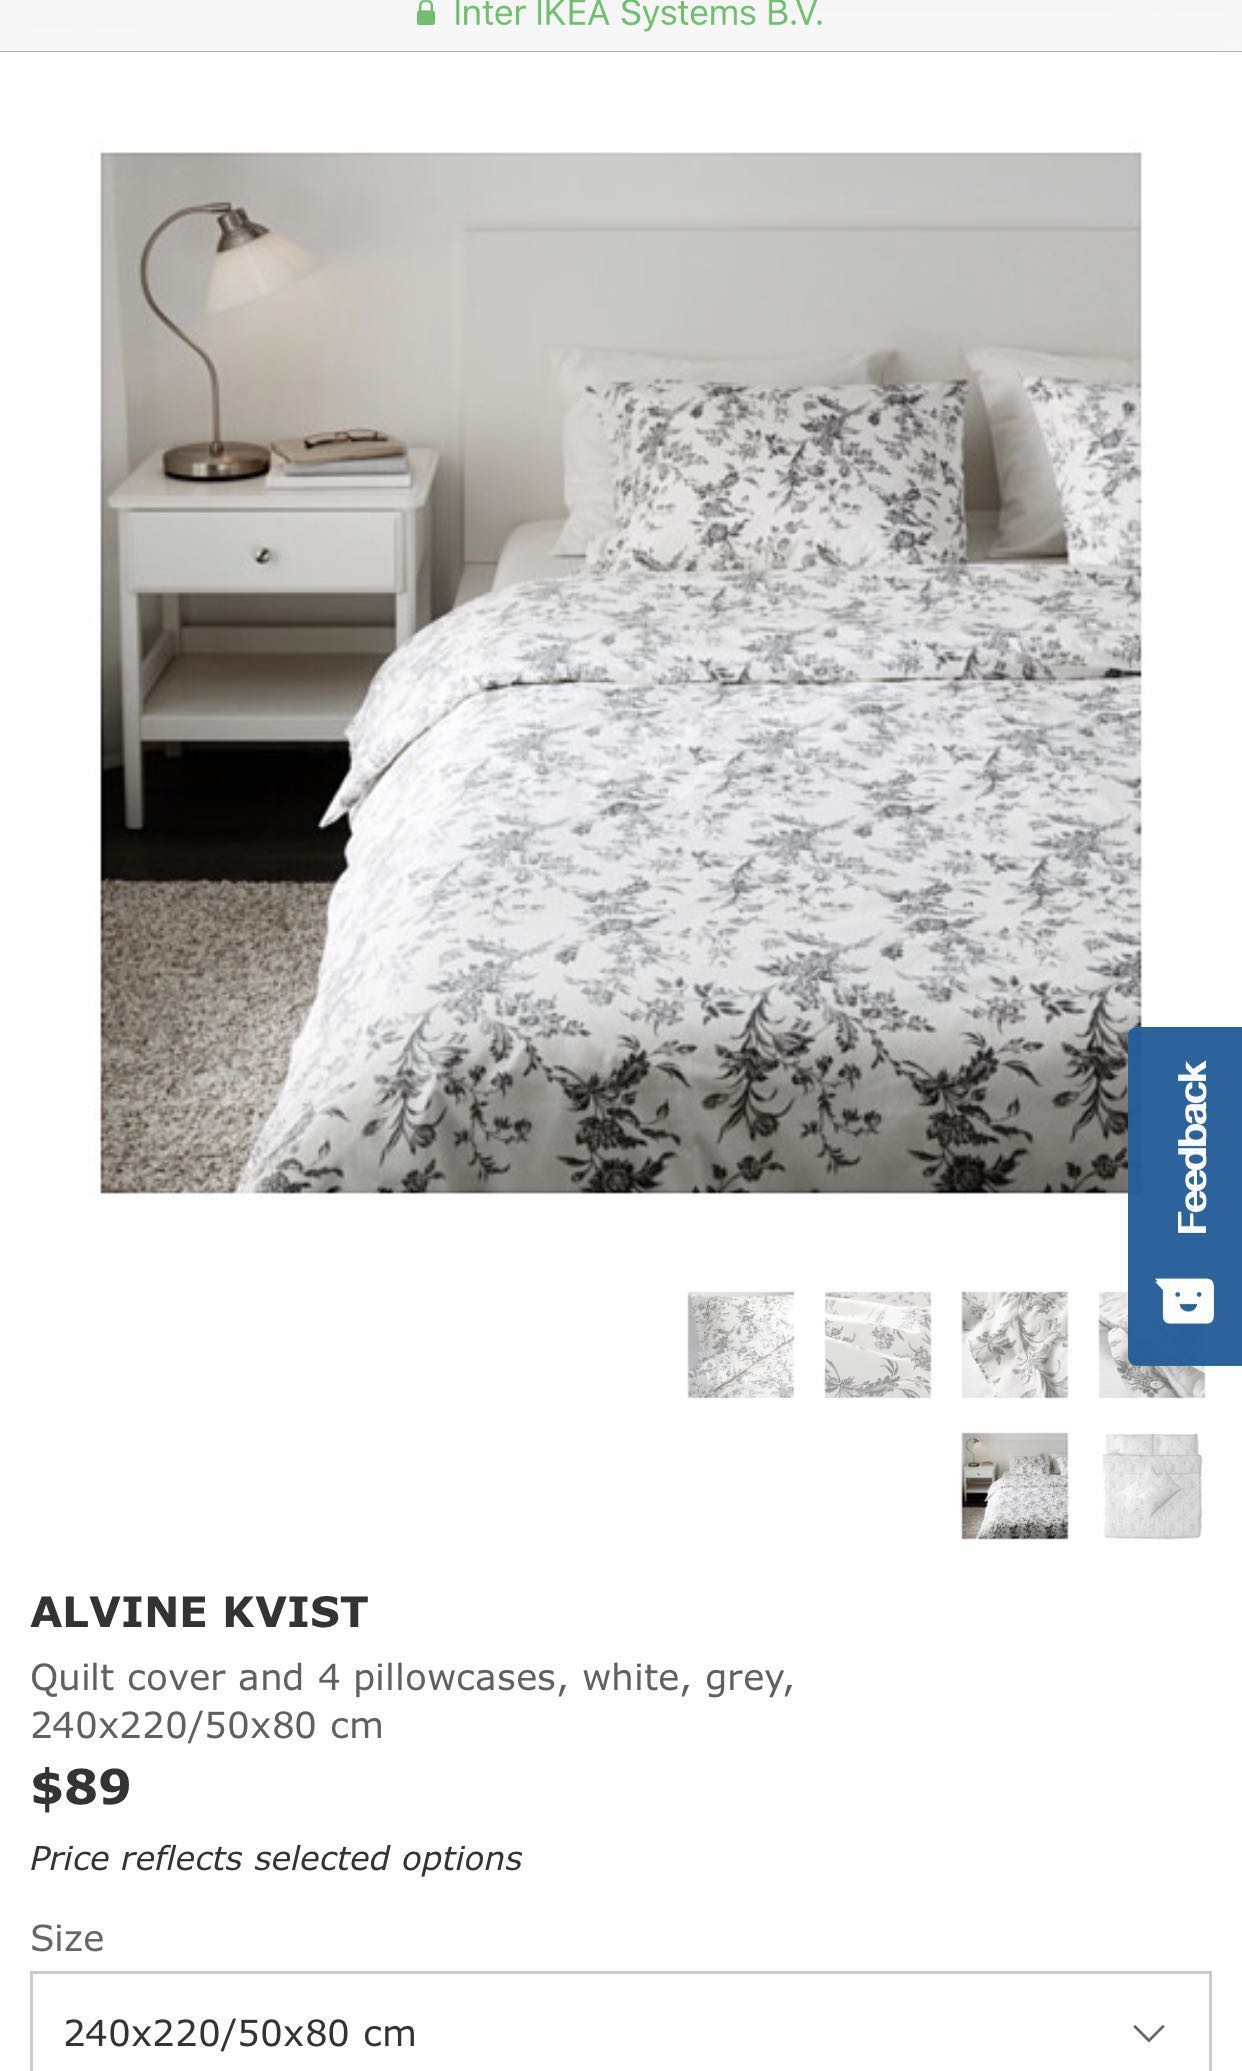 Ikea Brand New Alvine Kvist Quilt Cover And Pillowcases White Grey